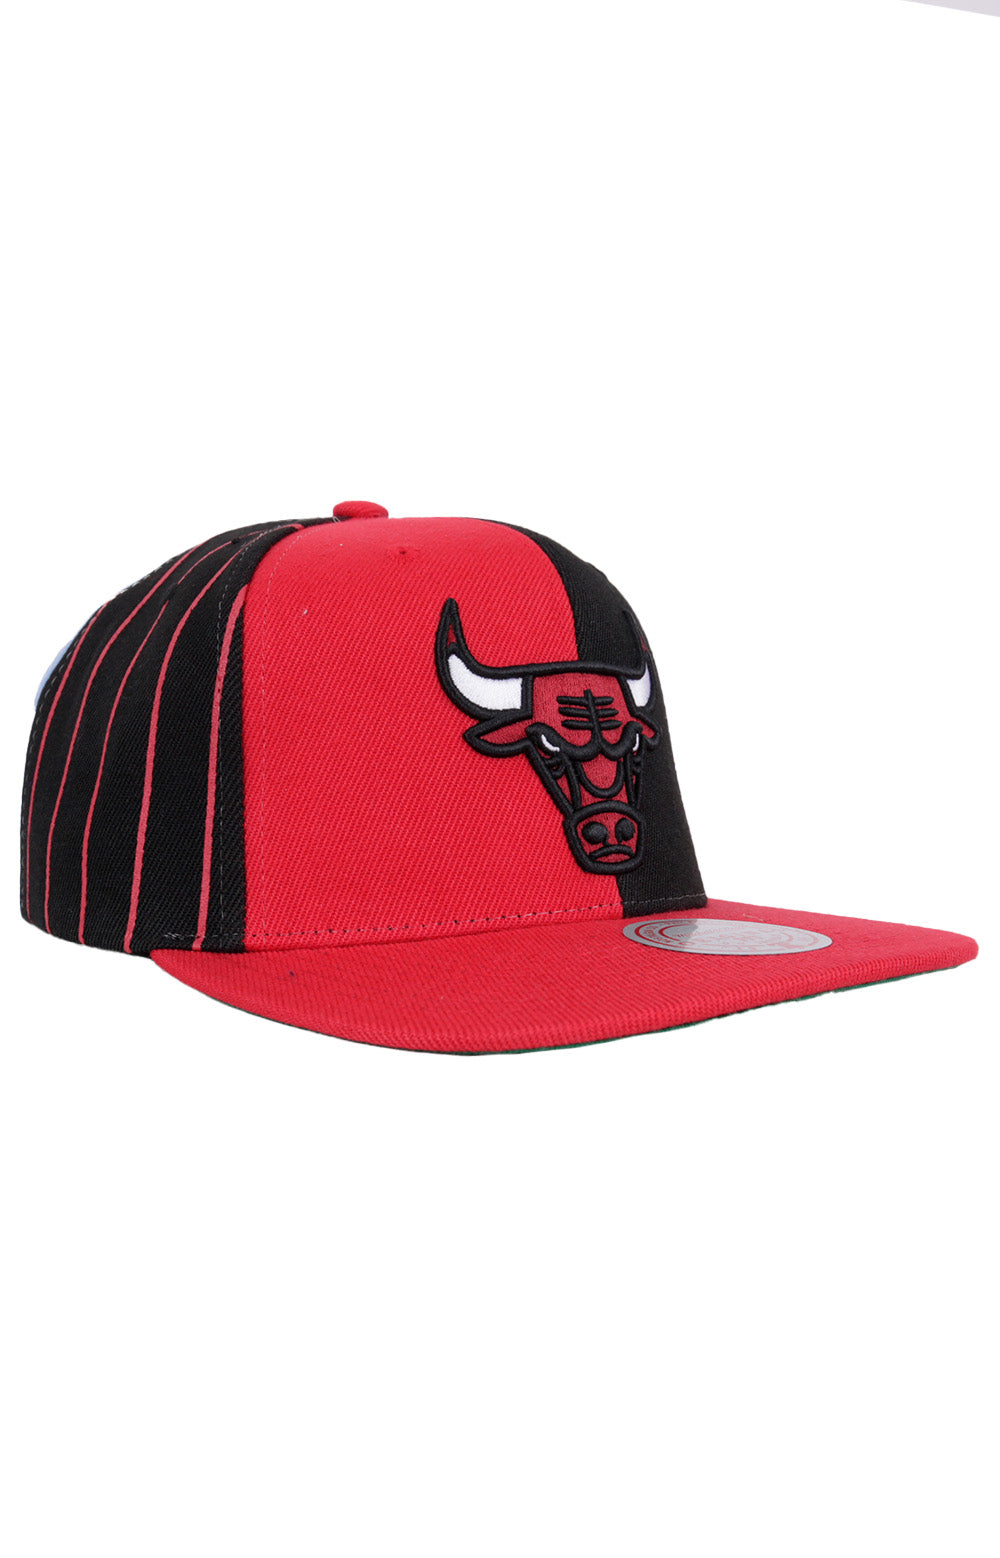 NBA What The Pinstripe Snap-Back Hat - Bulls